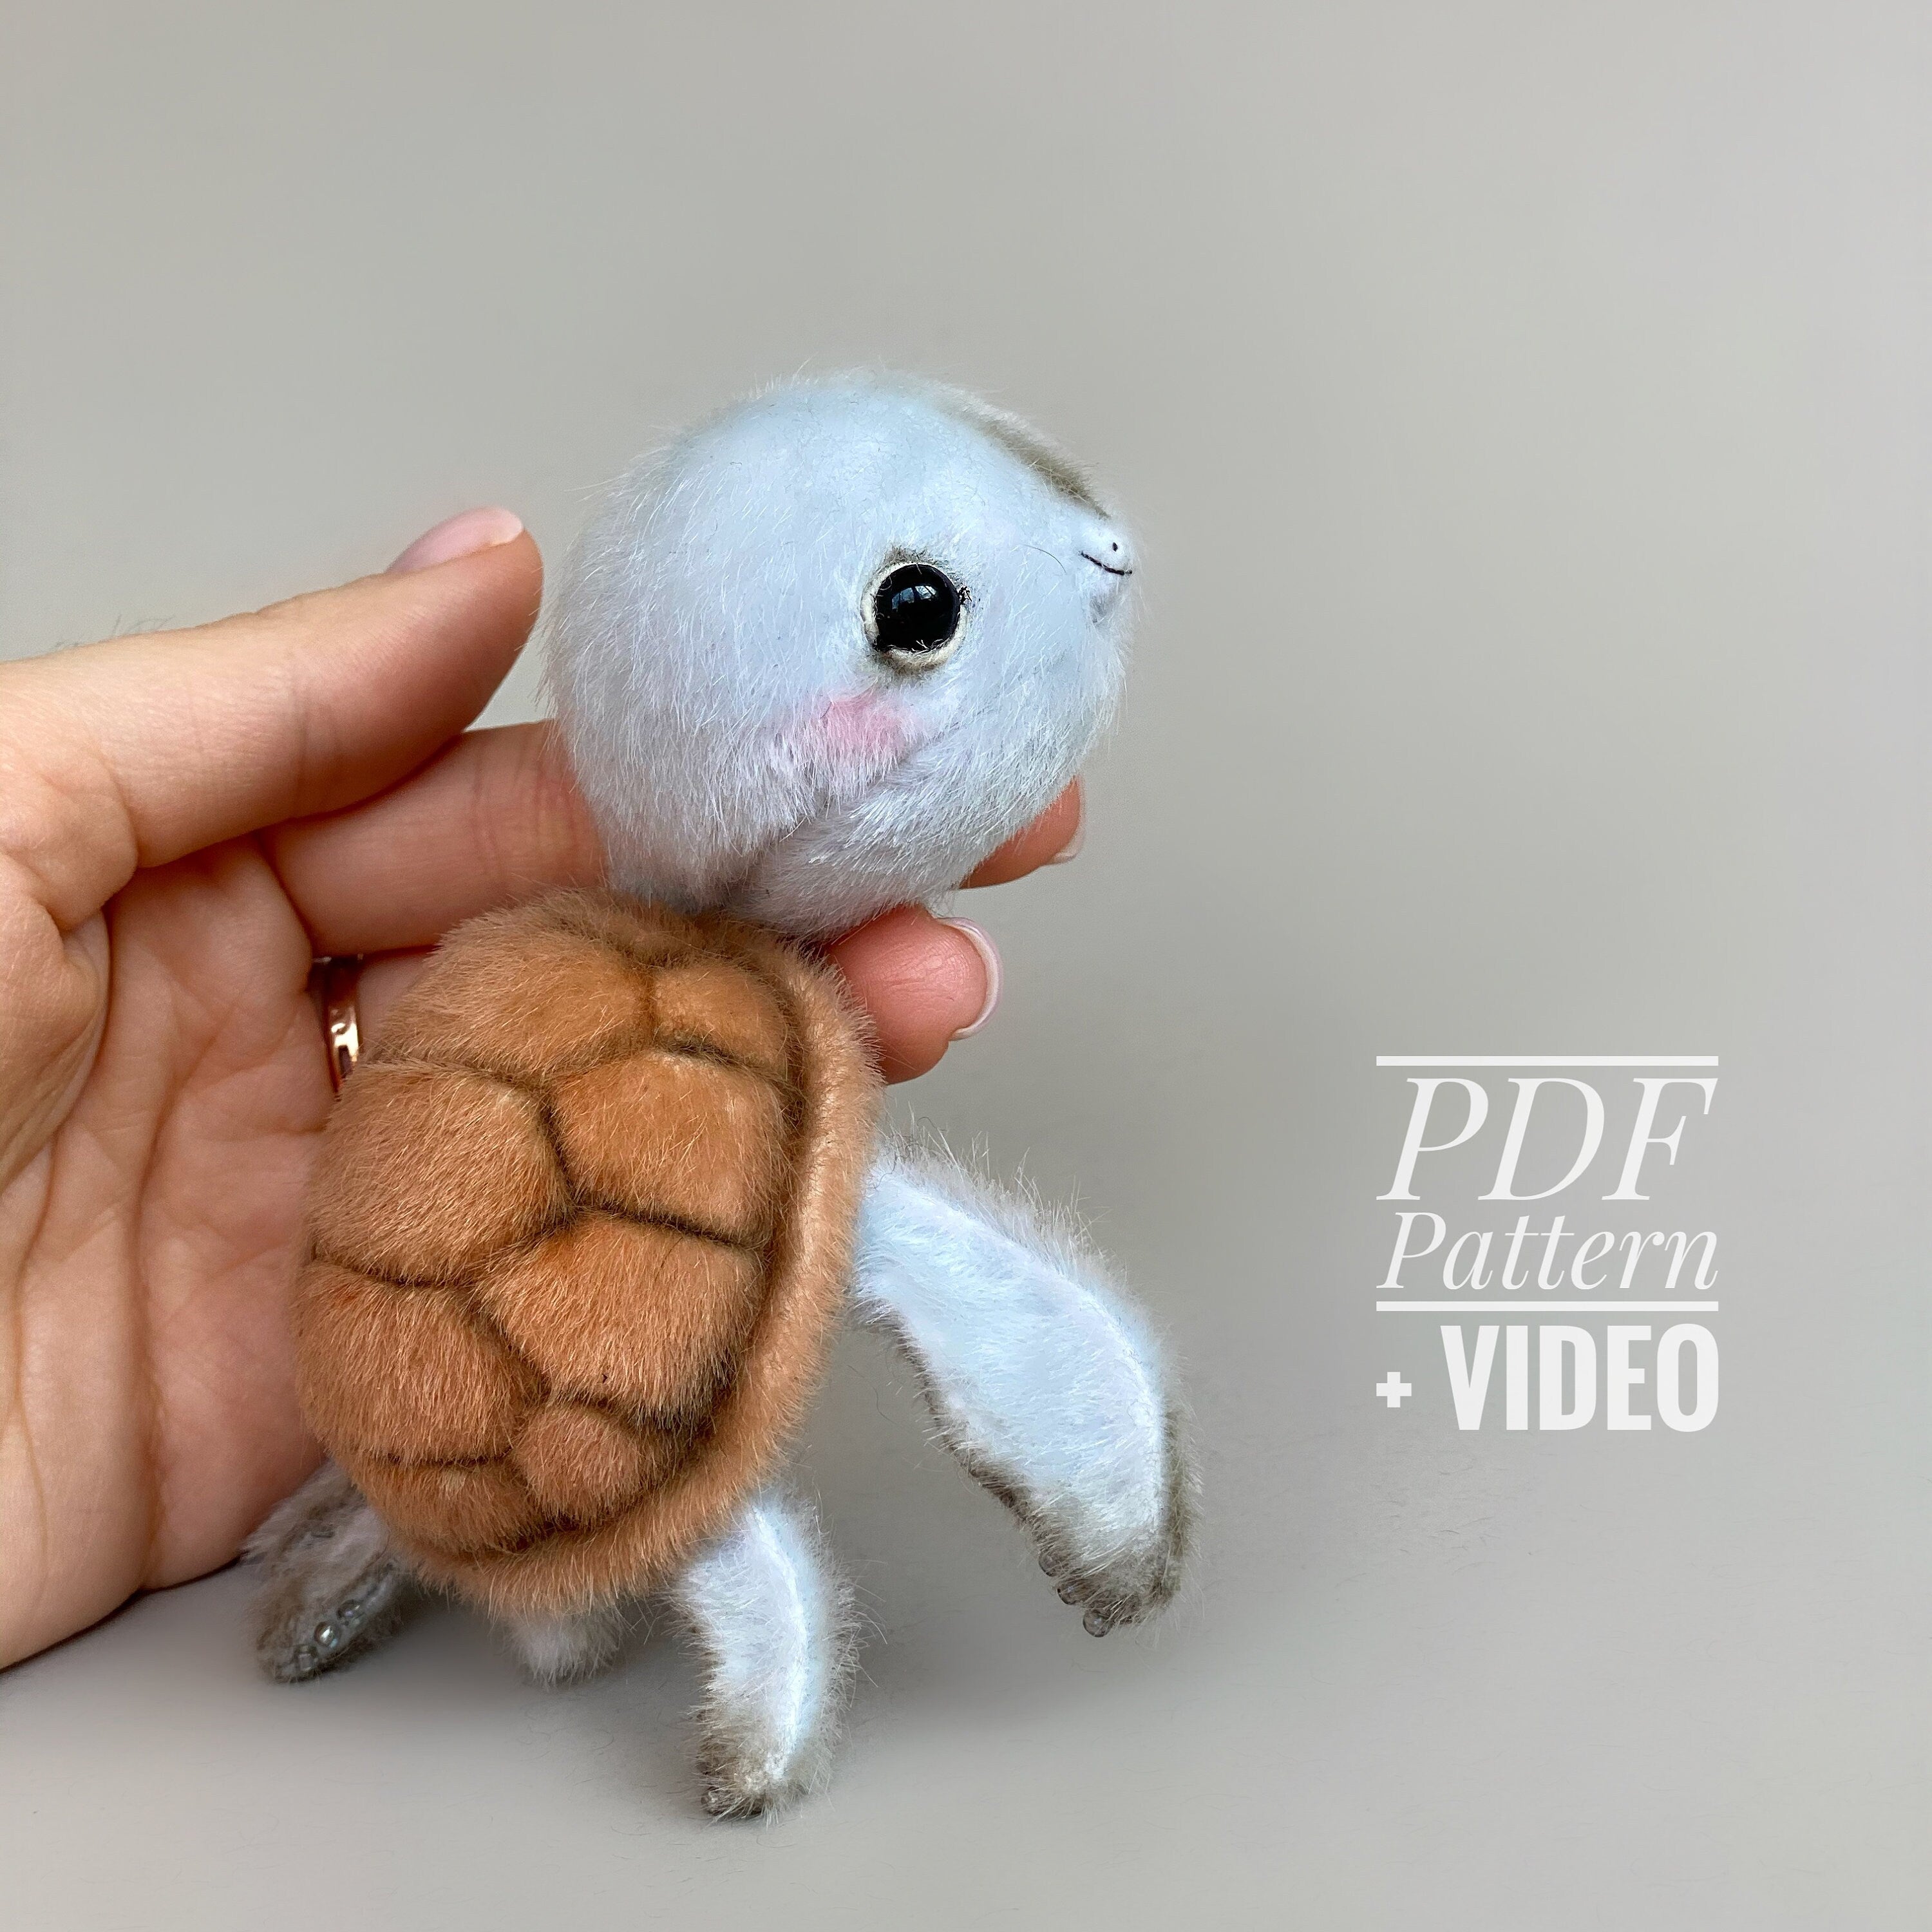 4 in 1 PATTERN Ocean Sea animals Shark Hammerhead Turtle Narwhal PDF sewing patterns Video tutorial DIY stuffed toy kids toy easy to sew